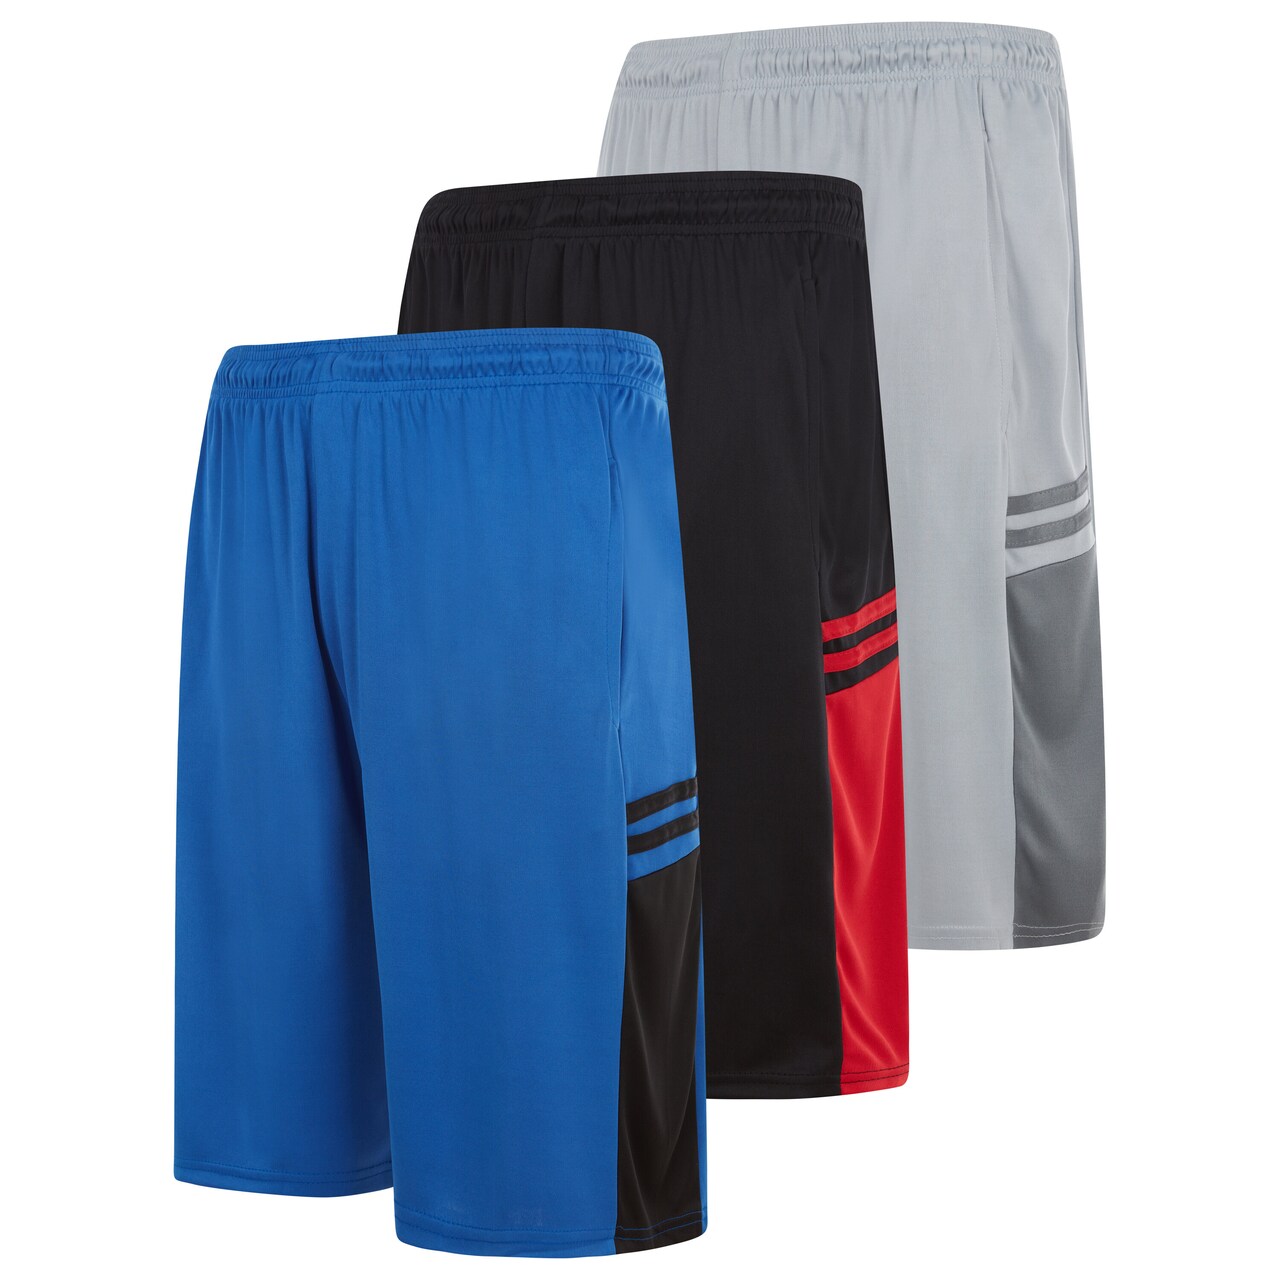 Men's Dry-Fit Sweat Resistant Athletic Shorts